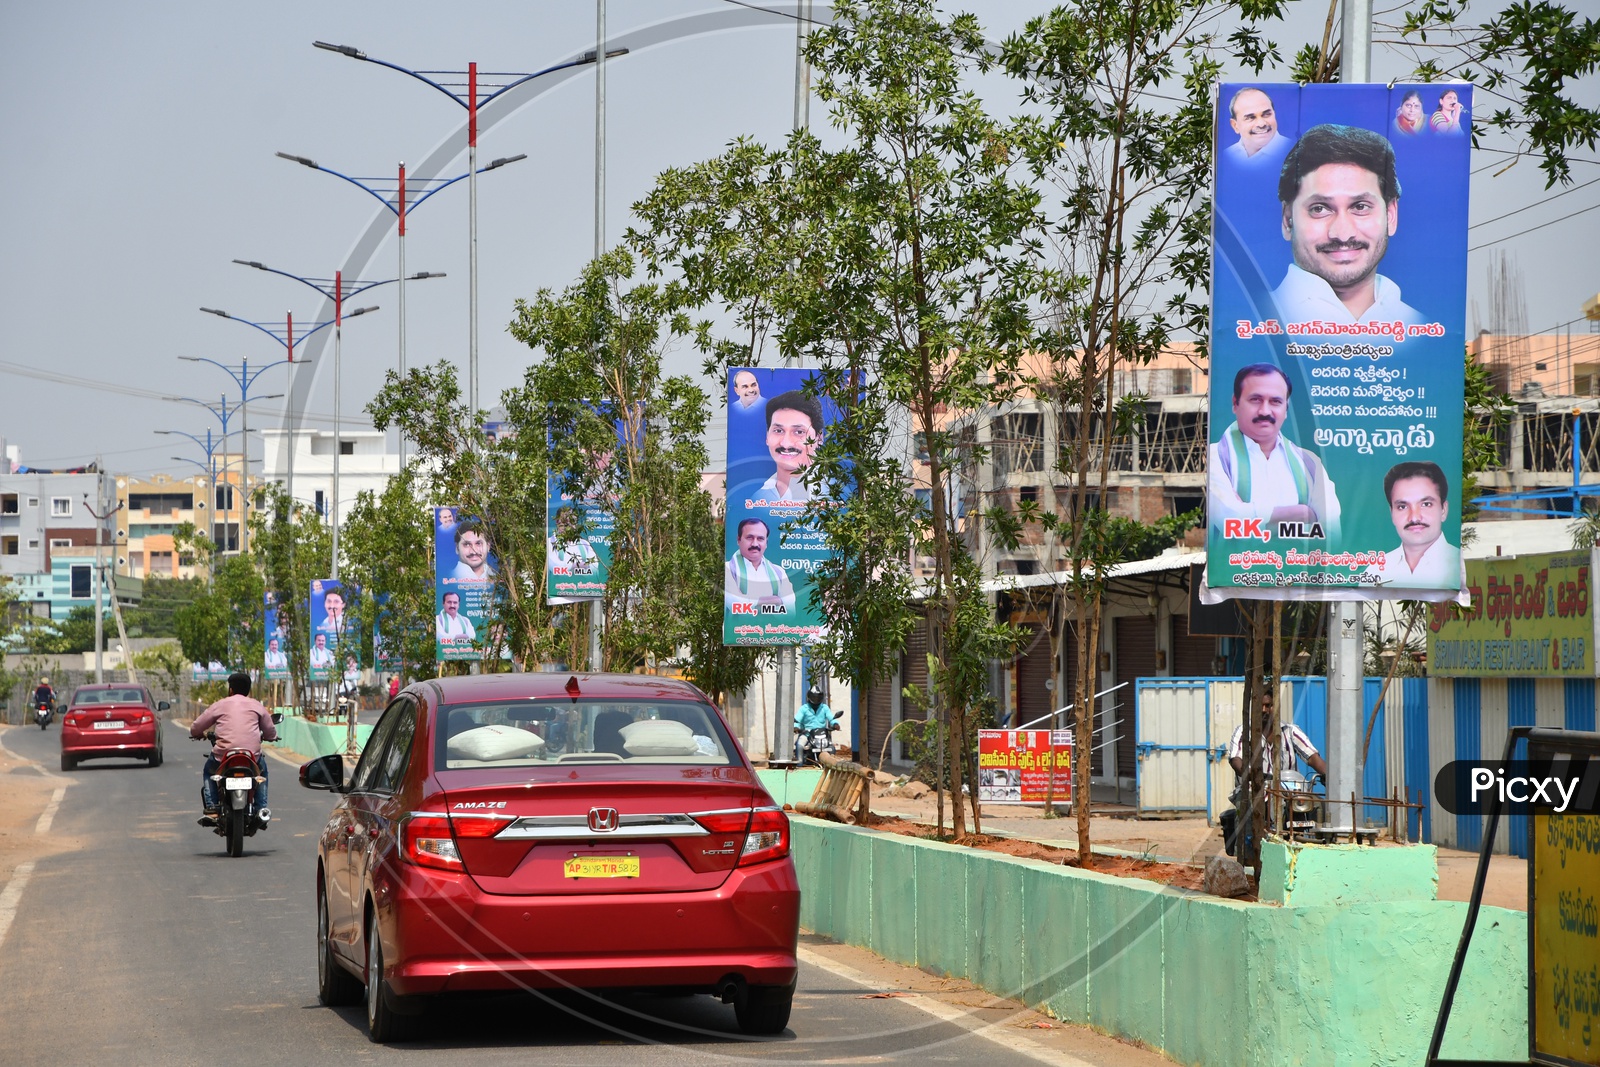 AP CM YS Jagan hoardings along the road